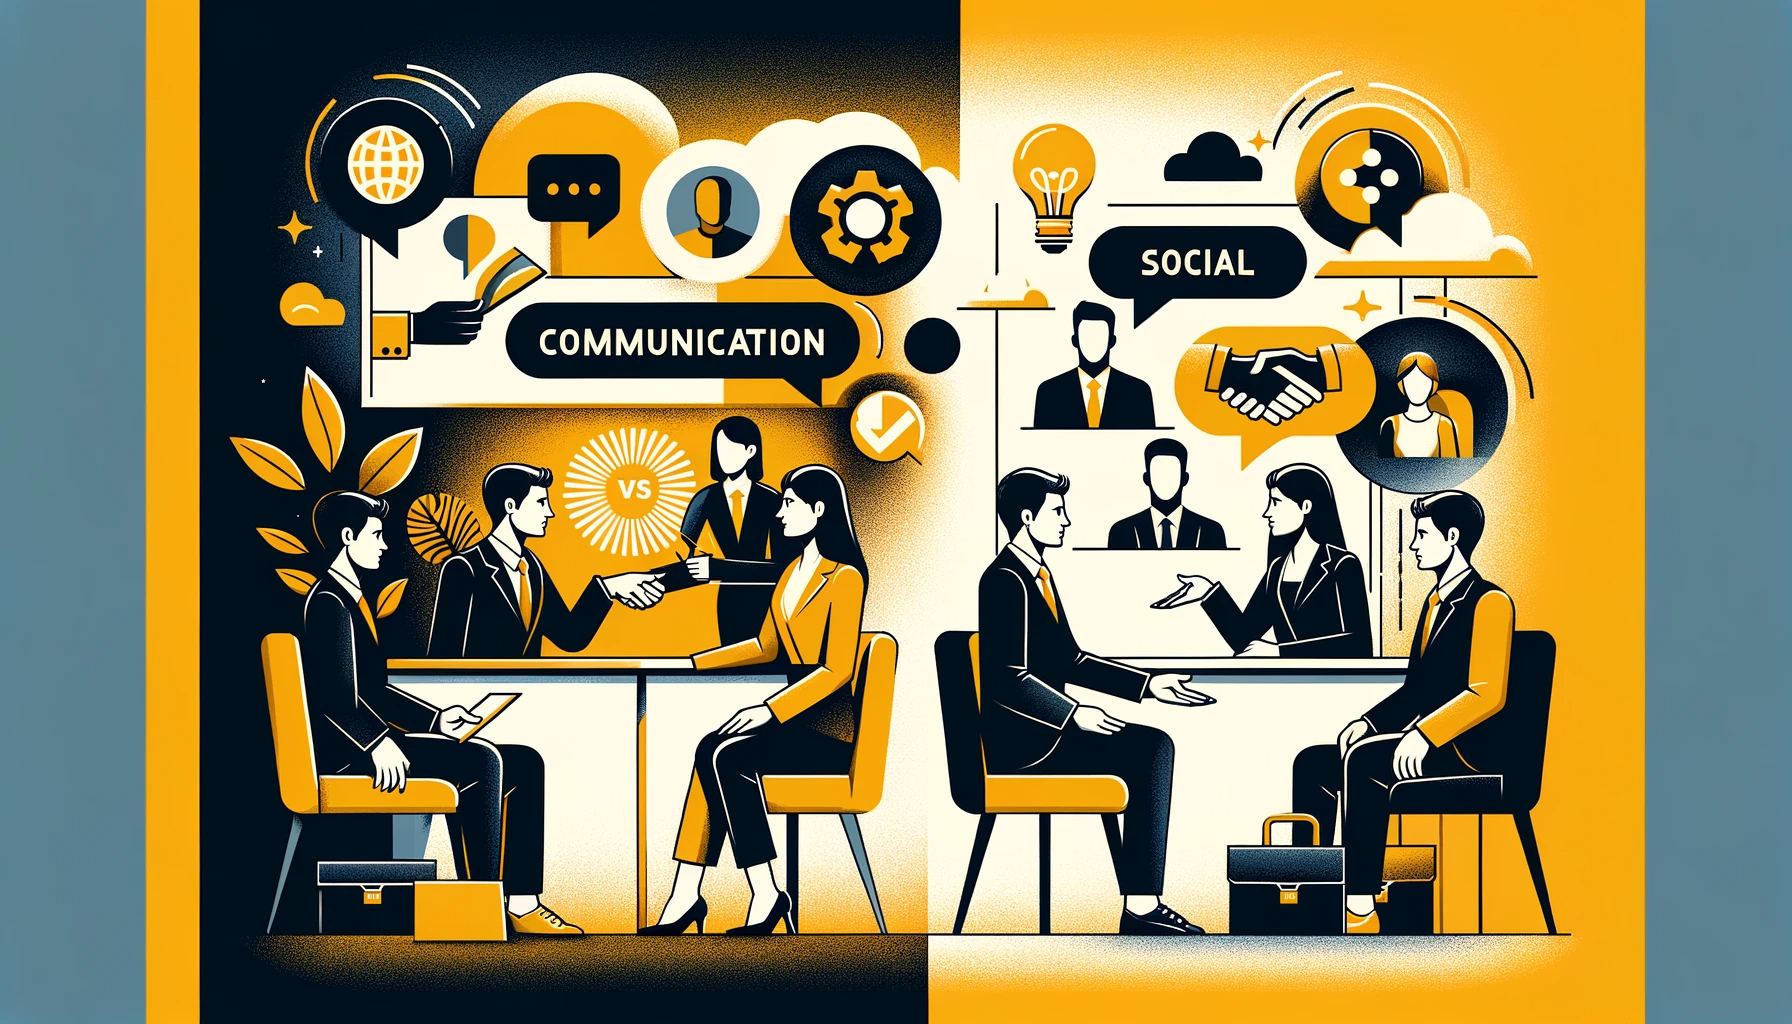 communication skills vs social skills in interview examples1